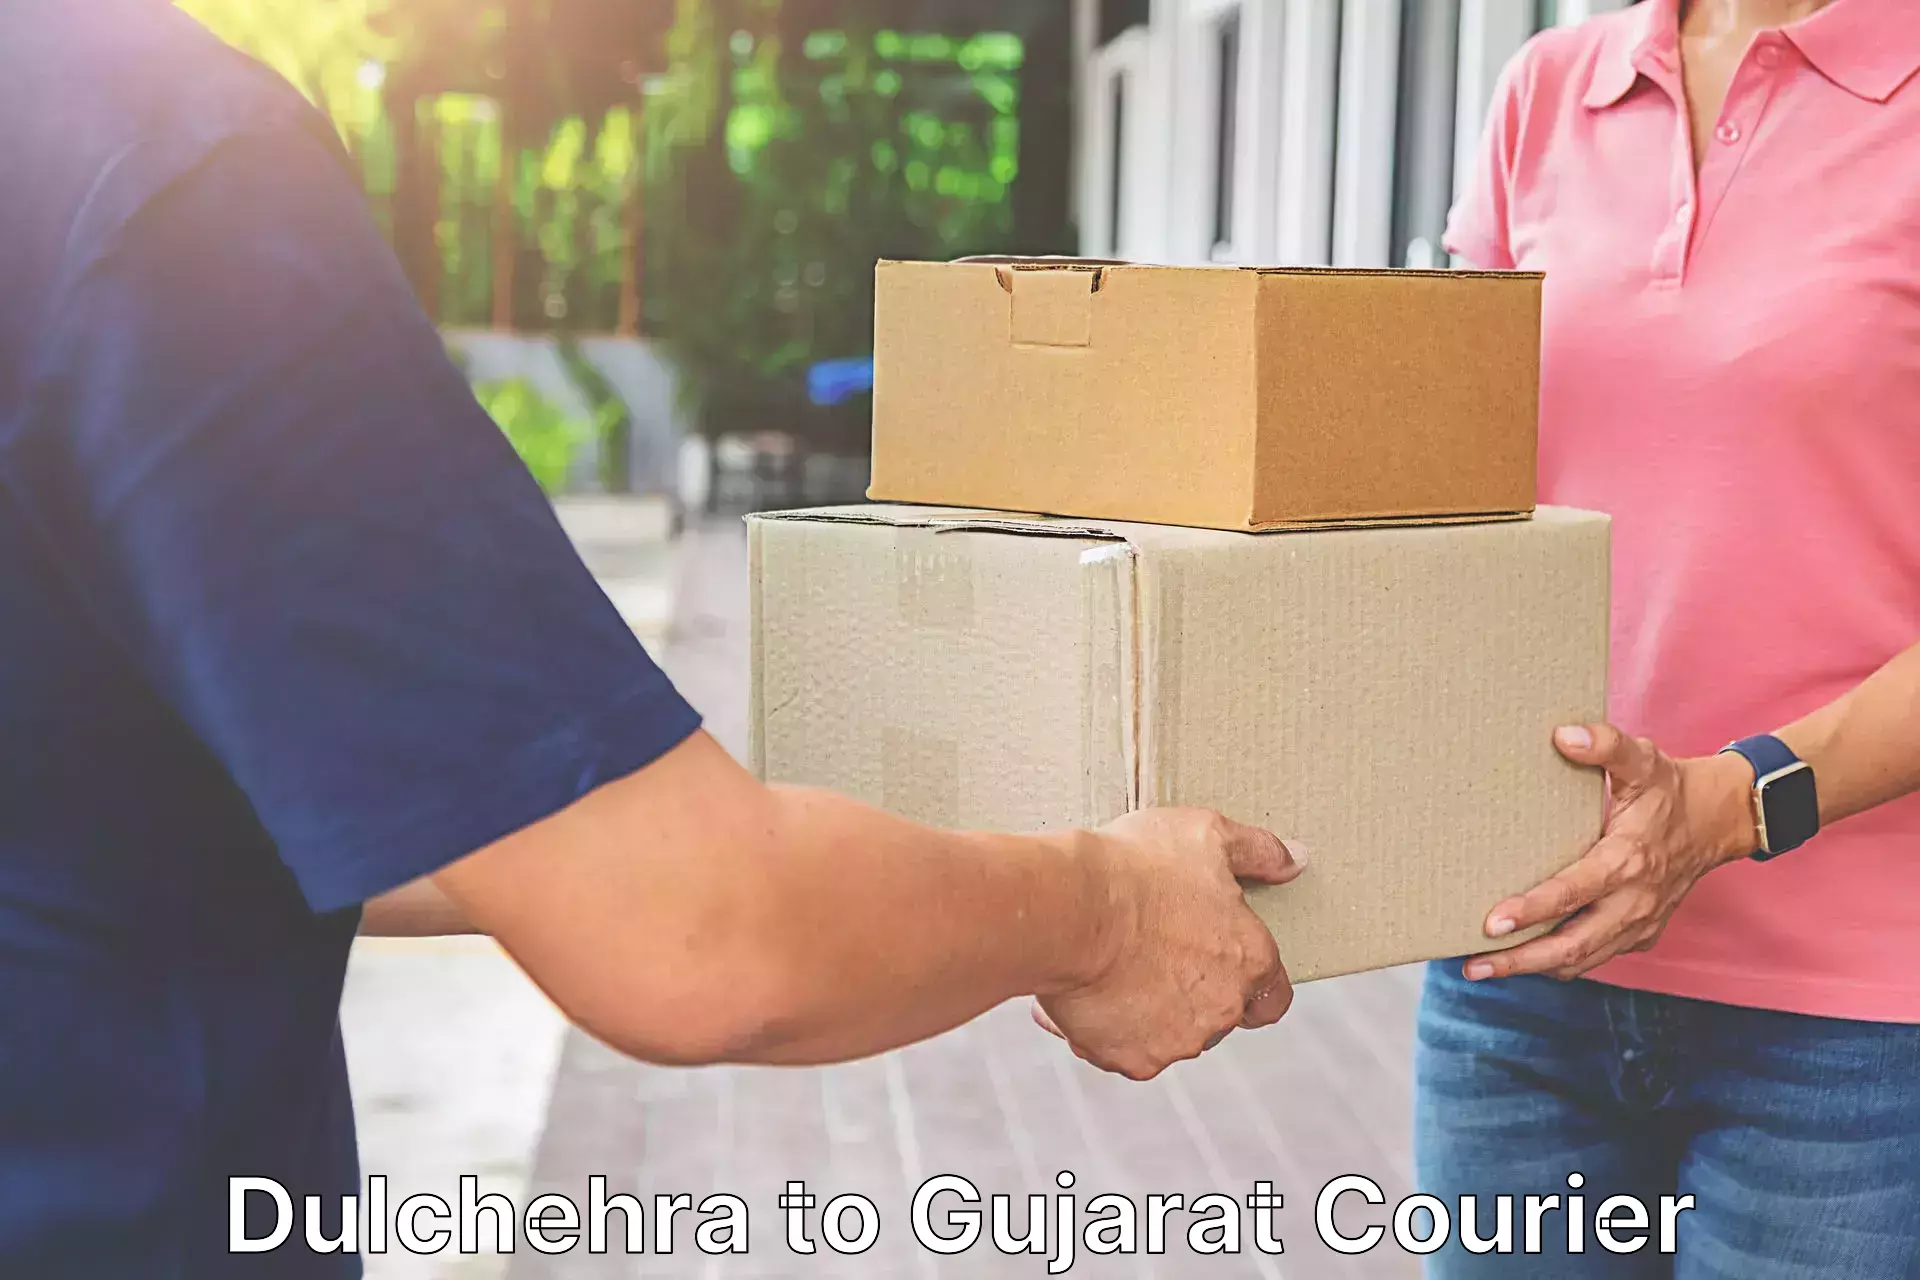 Courier service comparison in Dulchehra to Dharmaram